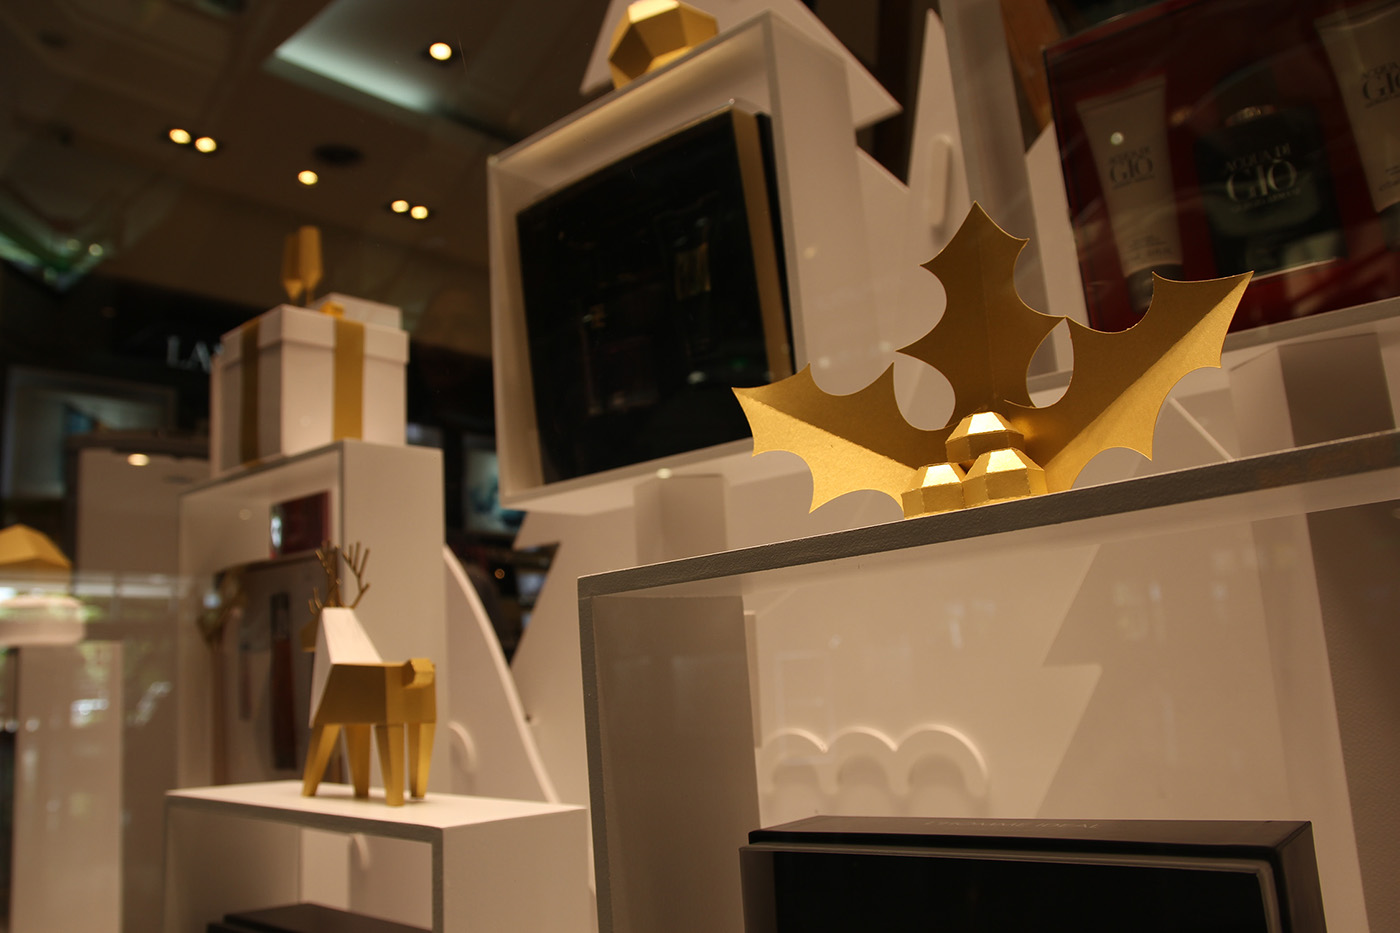 lowpoly papercraft Window Display vidriera escaparate navidad Christmas xmas White and gold juleriaque